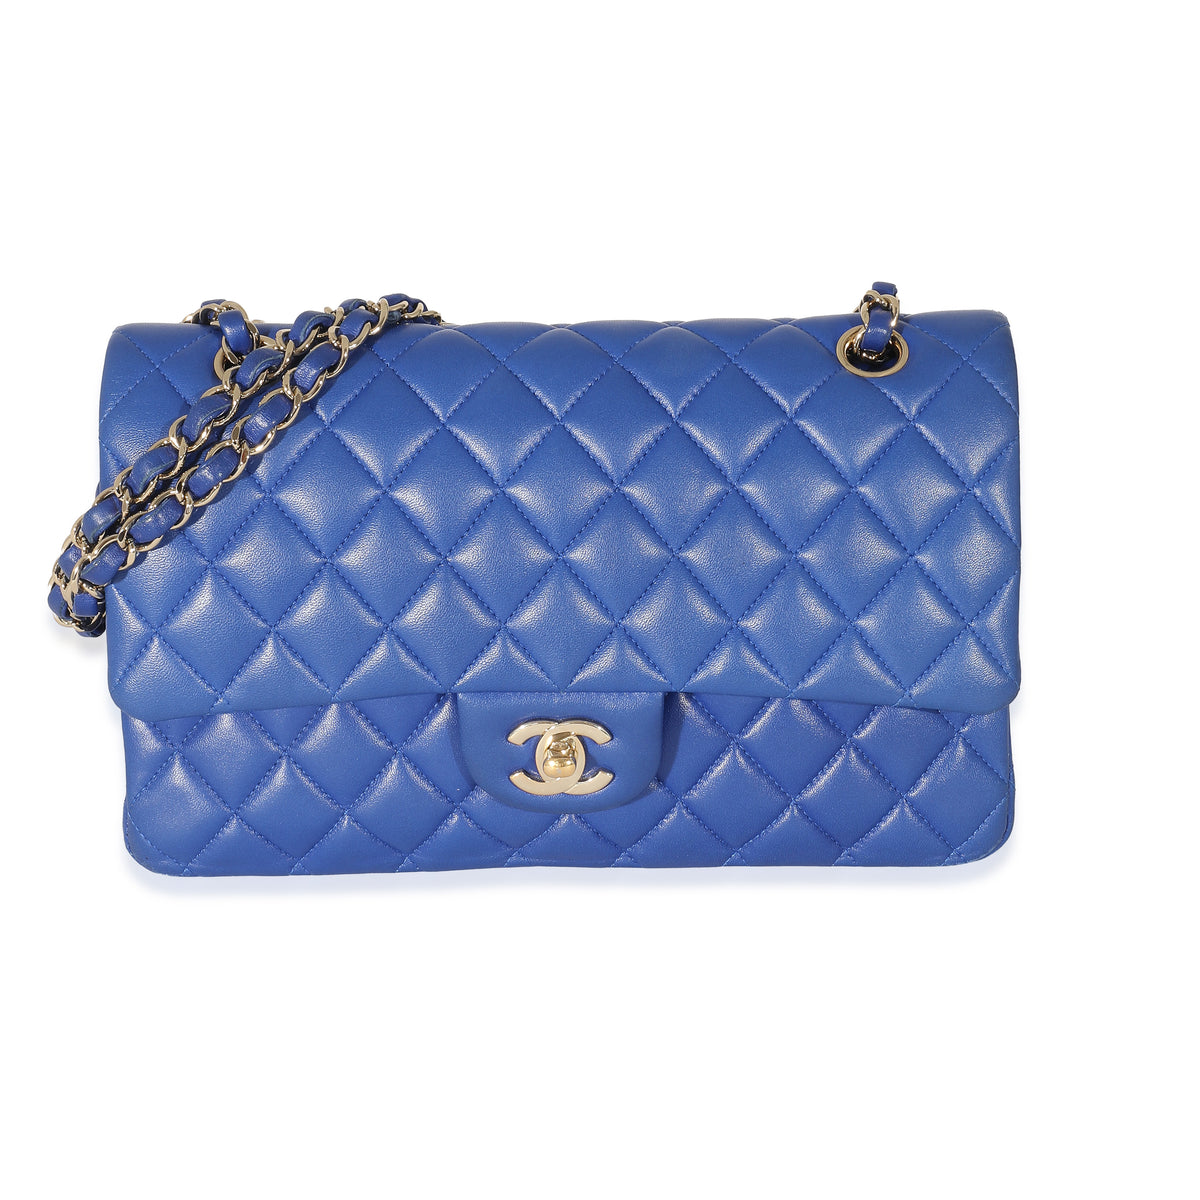 Chanel Royal Blue Lambskin Medium Classic Flap Bag